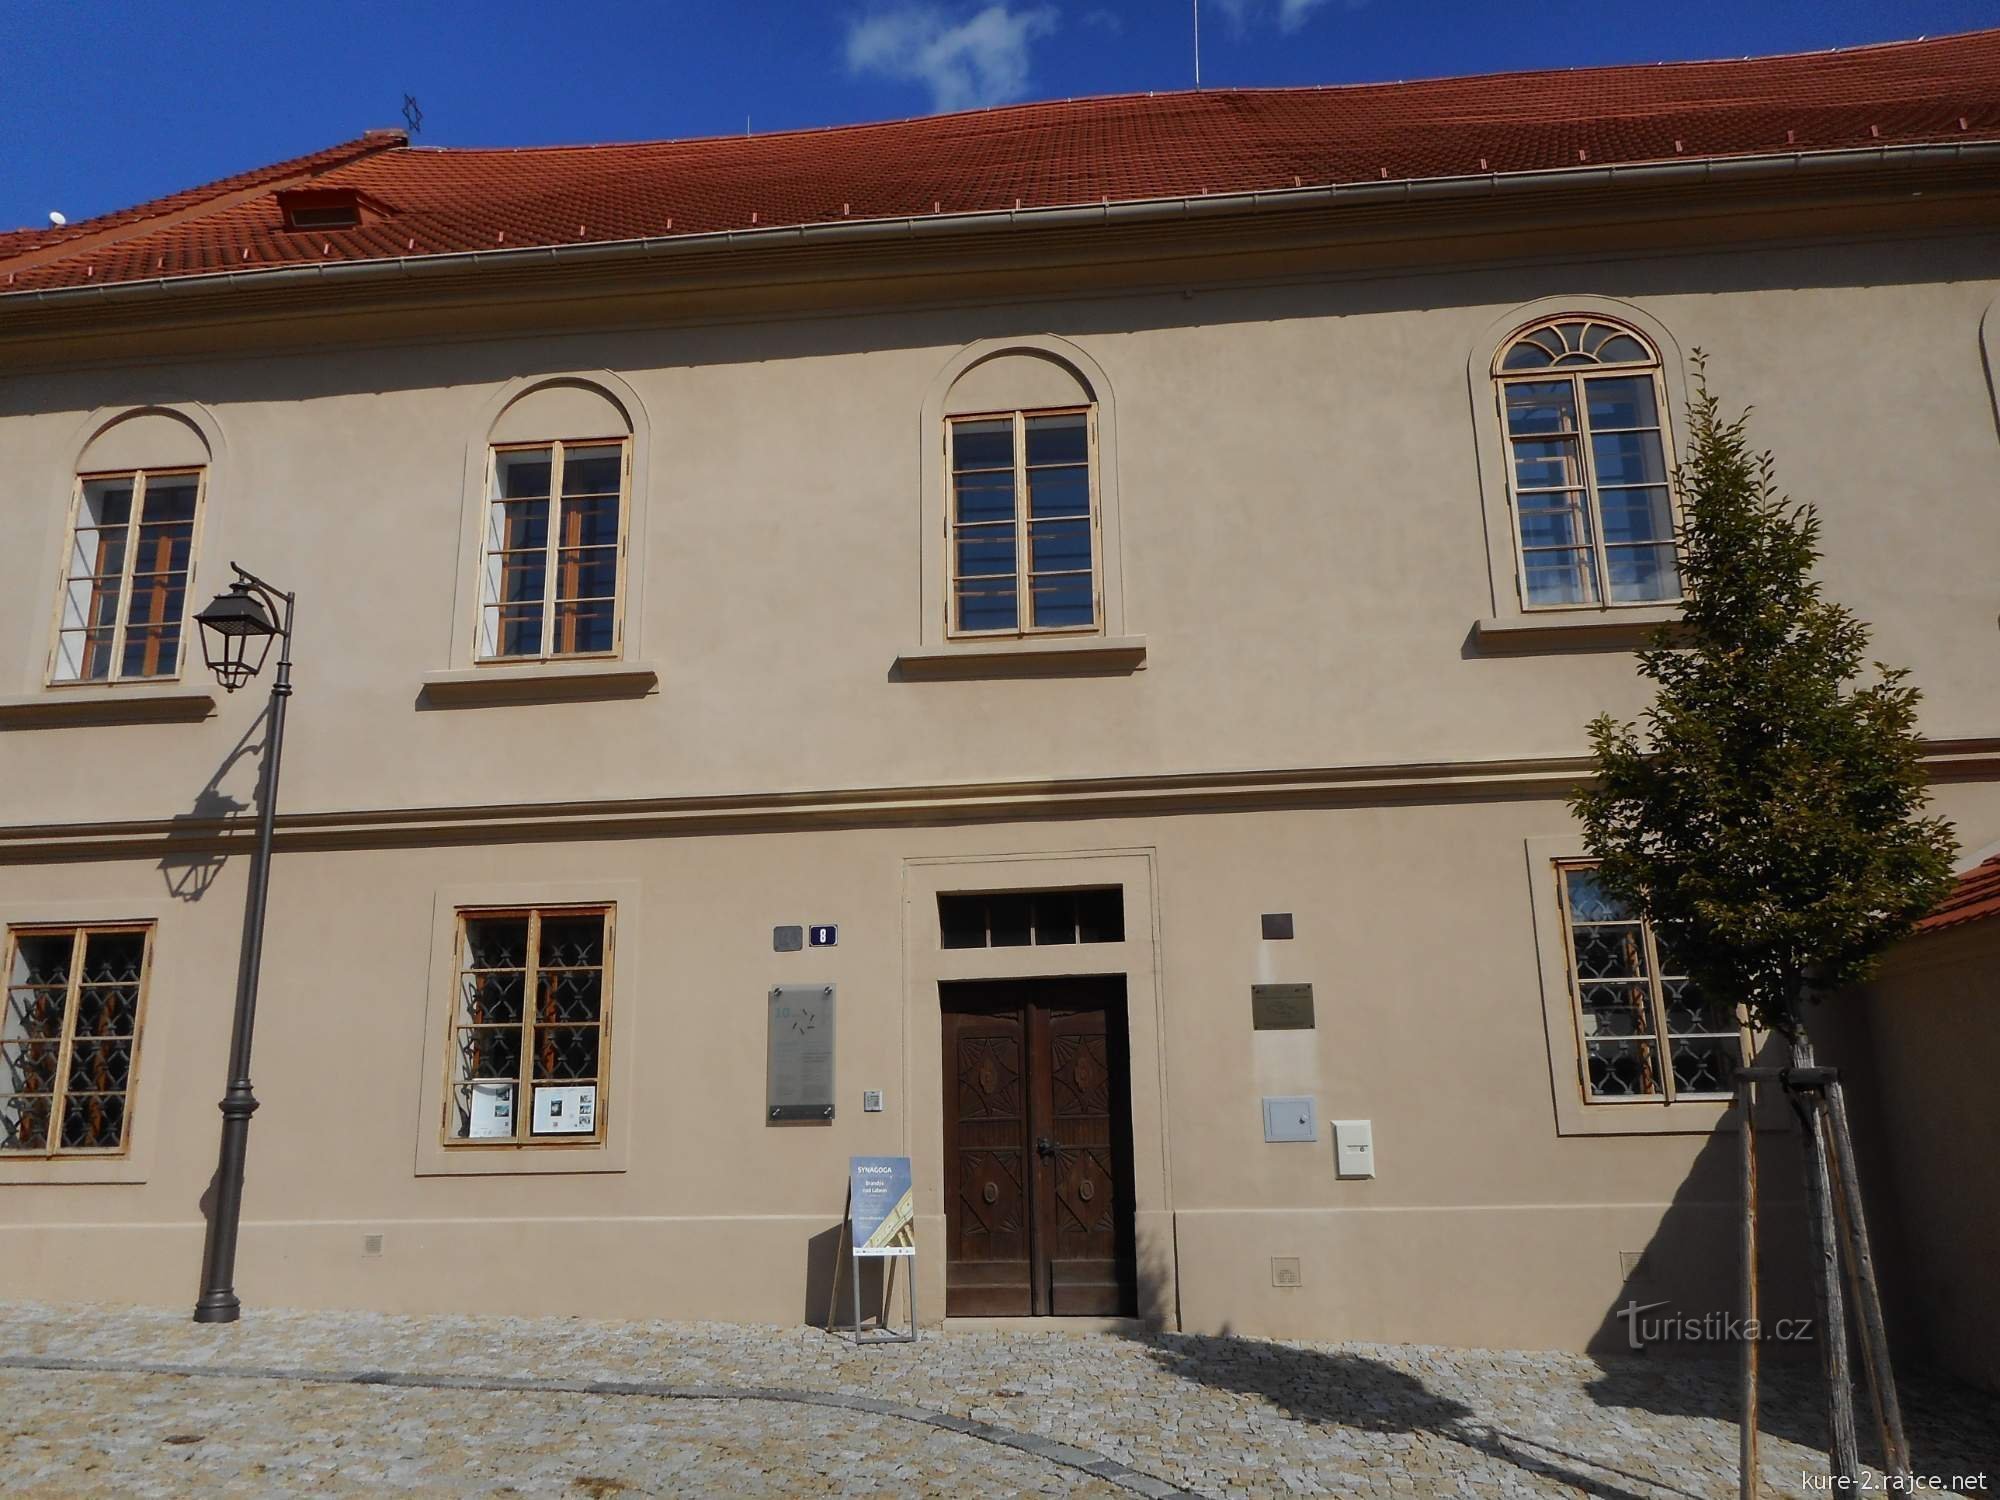 Astăzi, sinagoga servește ca un muzeu evreiesc